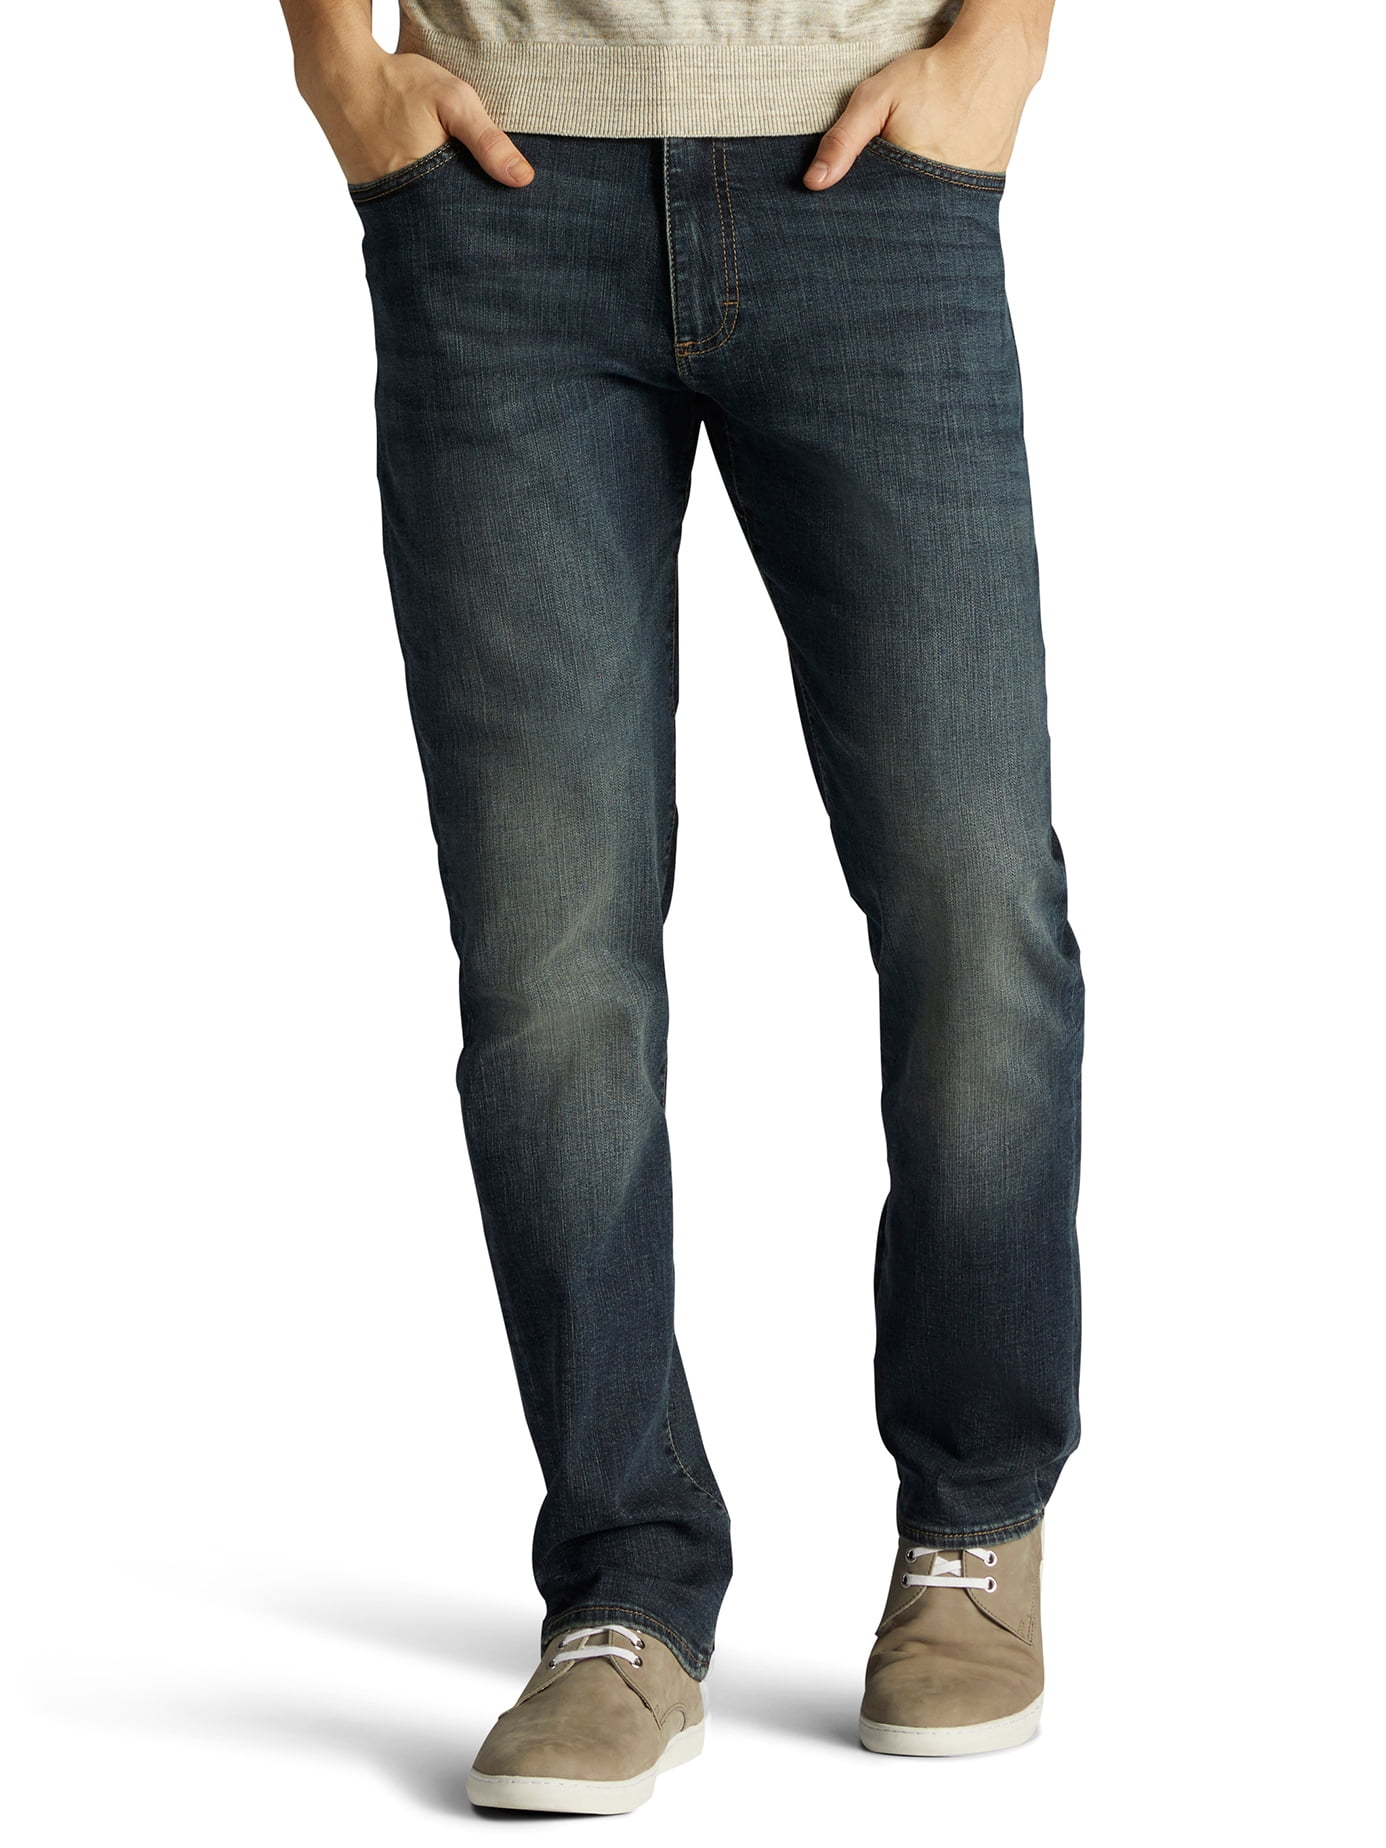 Lee maverick jeans